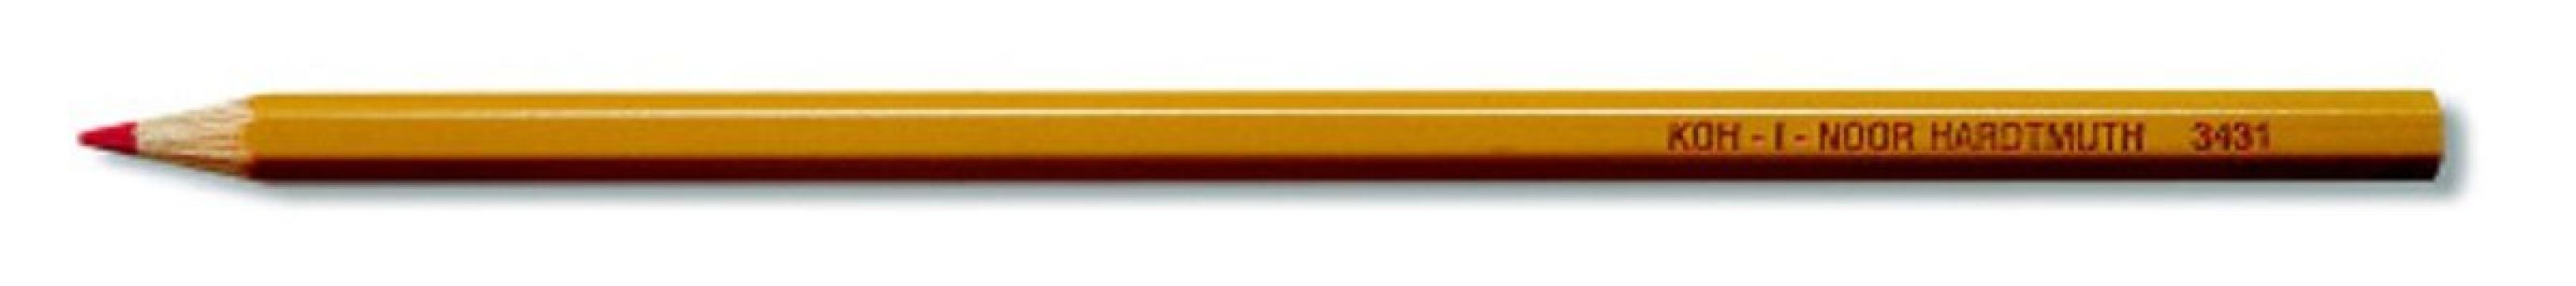 Ceruzka Koh-i-noor 3431 červená